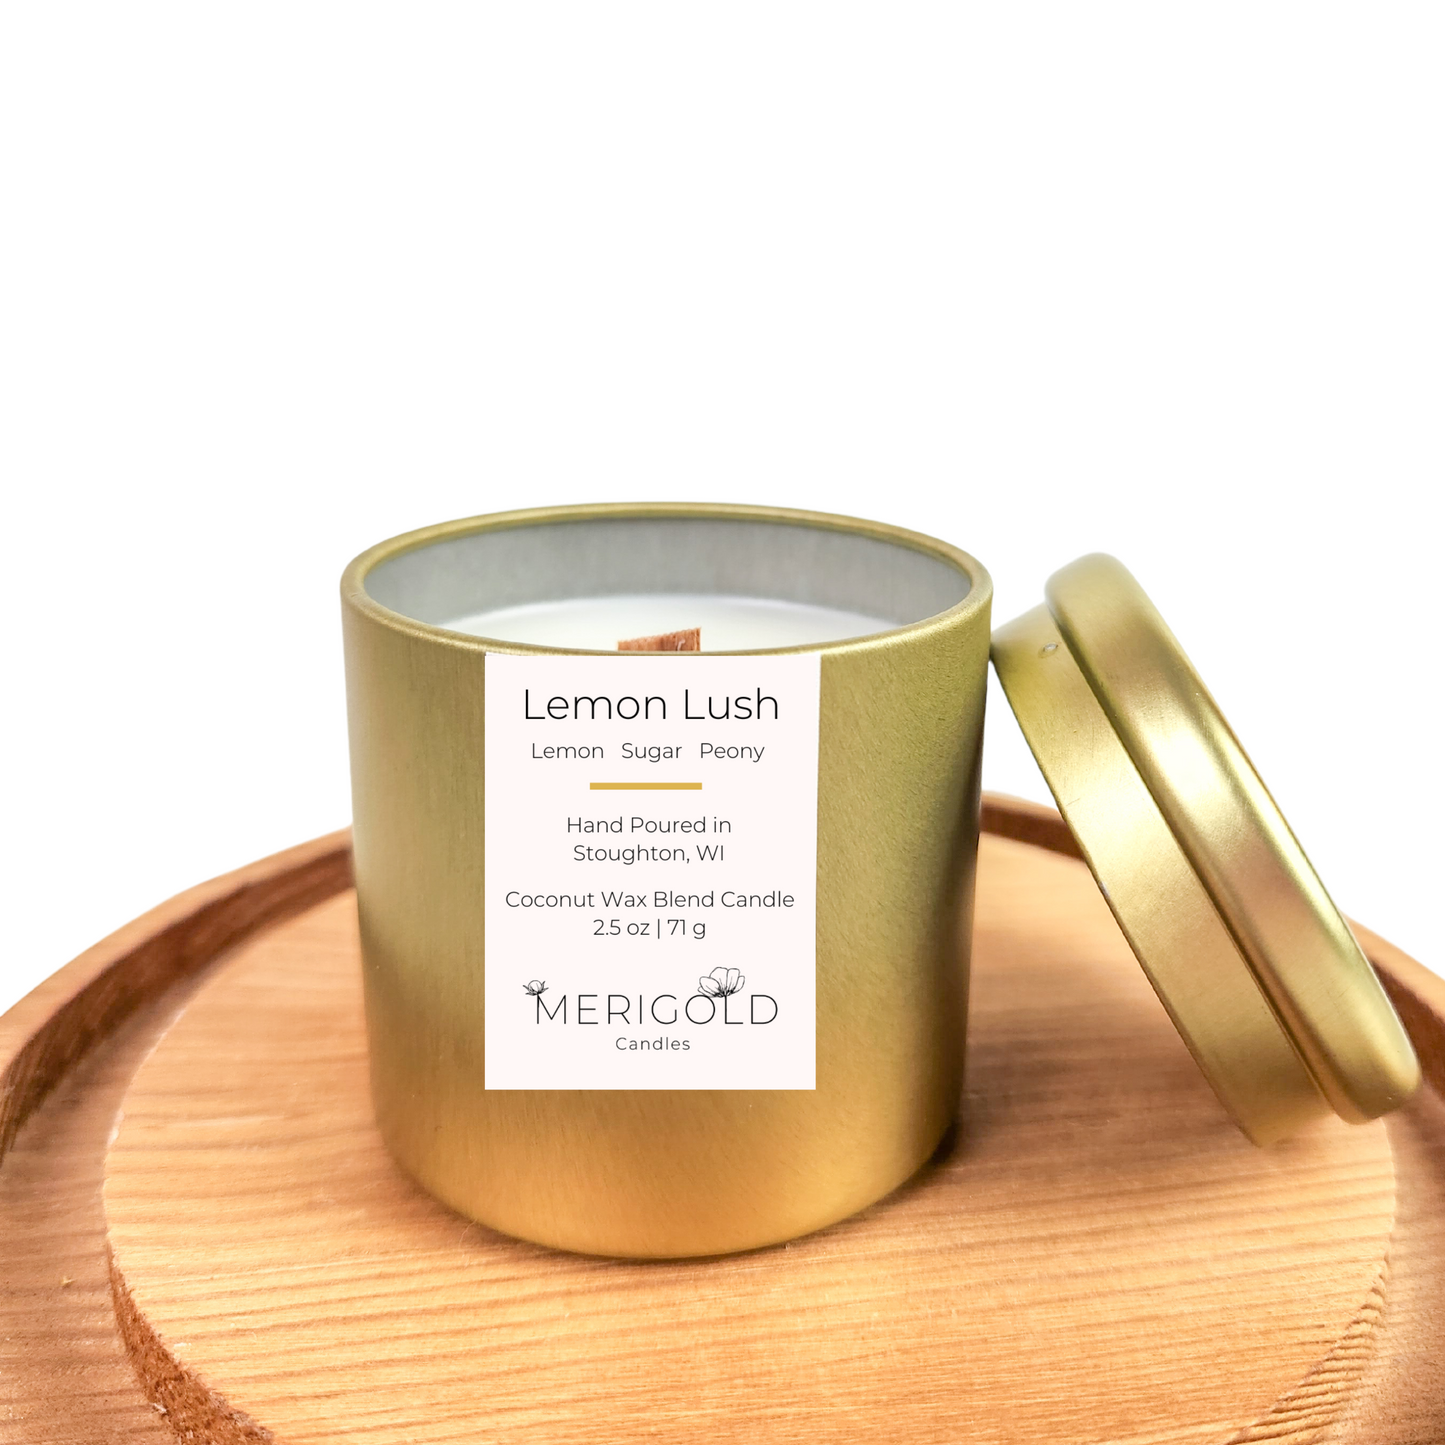 Lemon Lush Candle- Lemon, Sugar, Peony